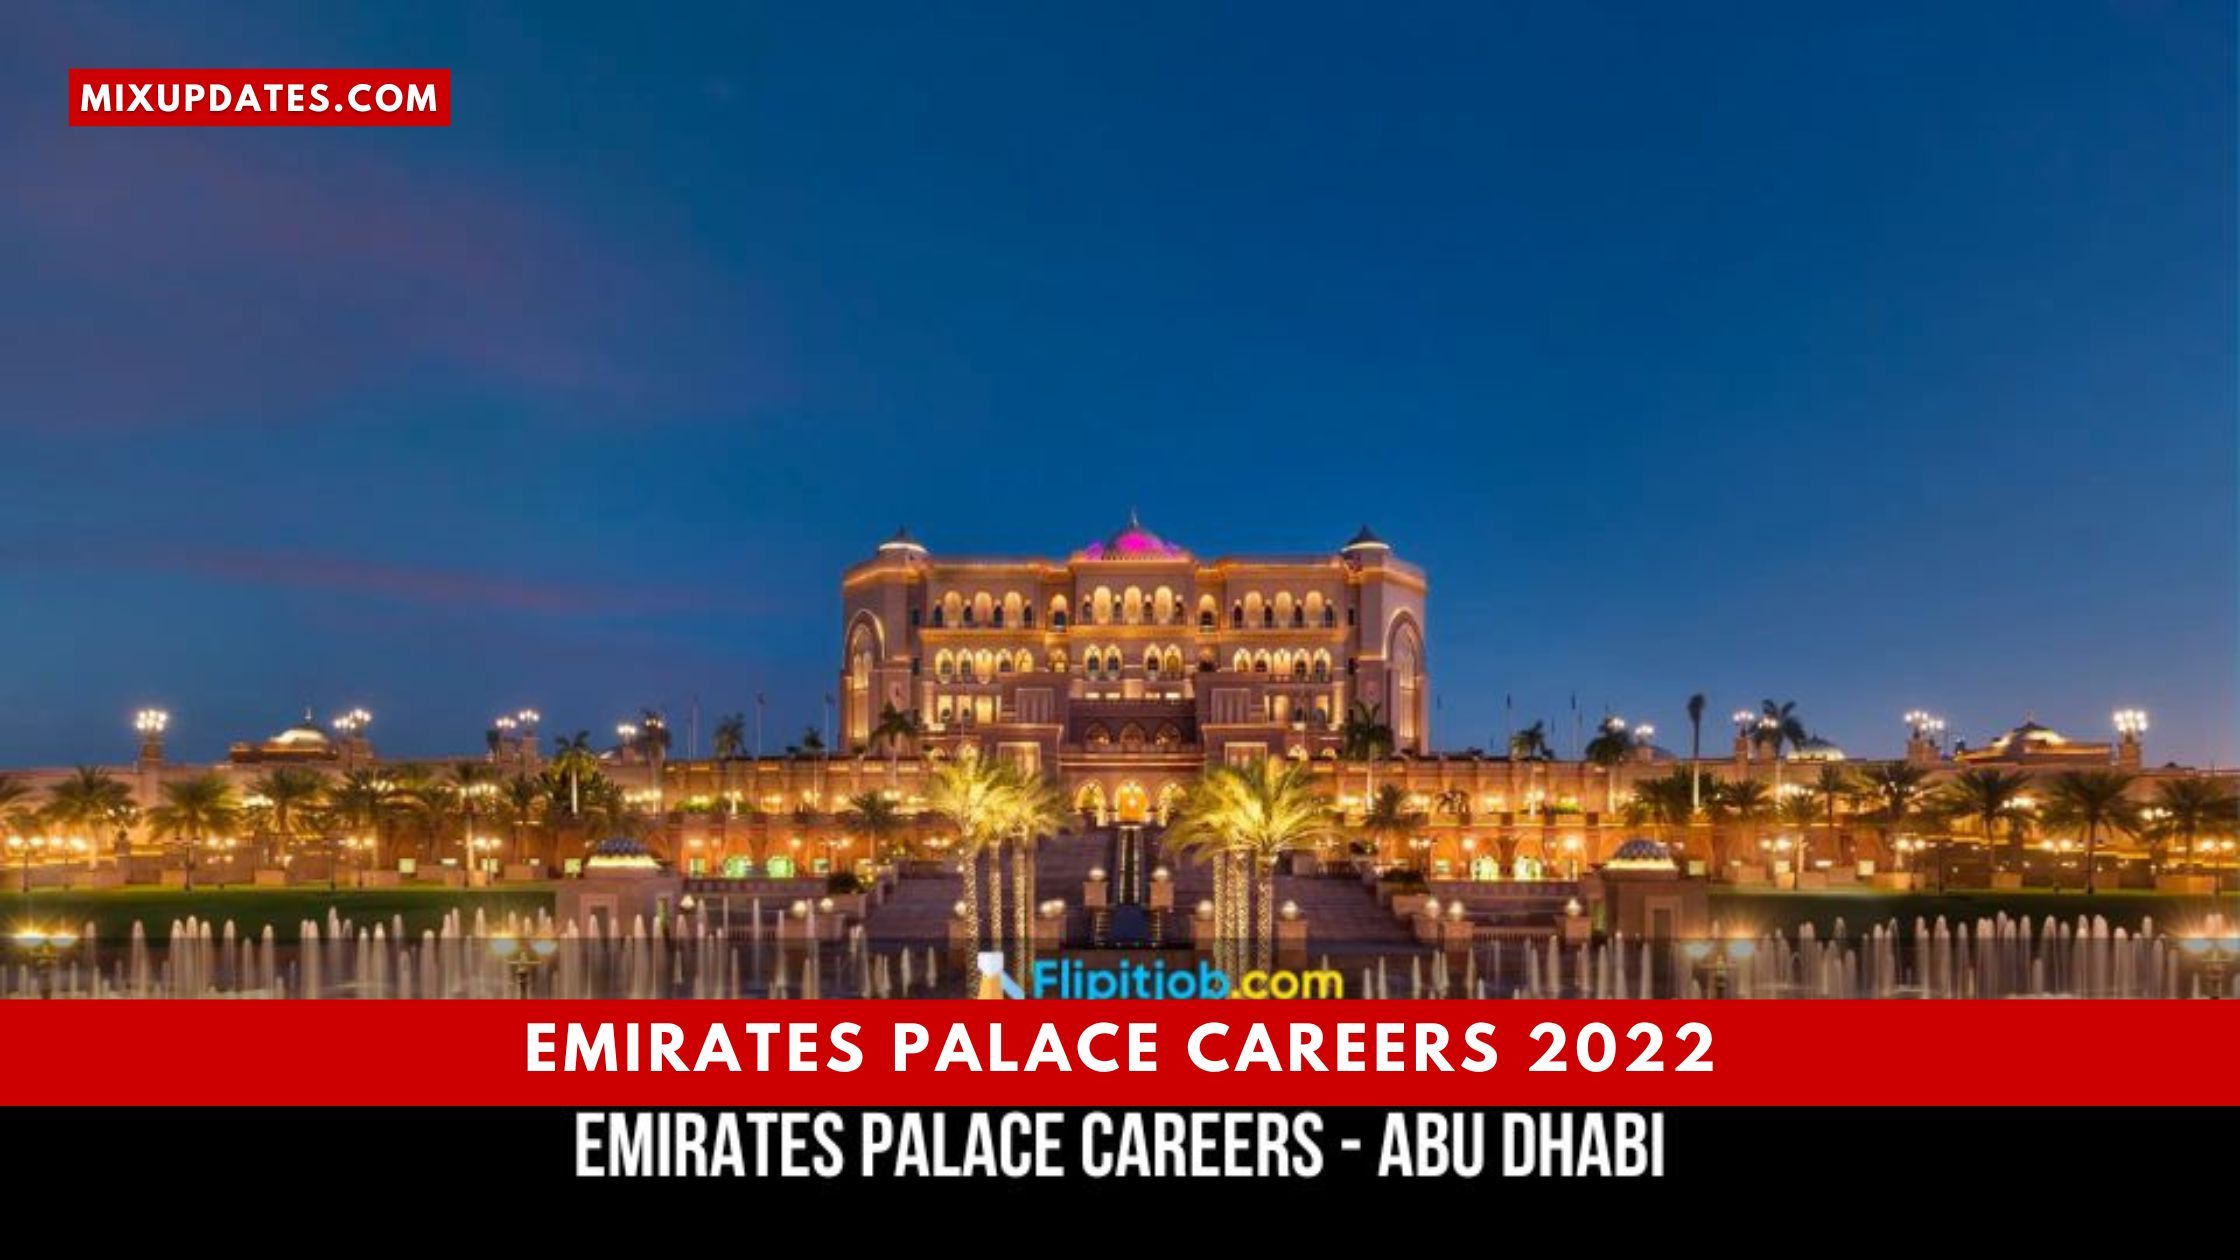 Emirates Palace Careers 2022